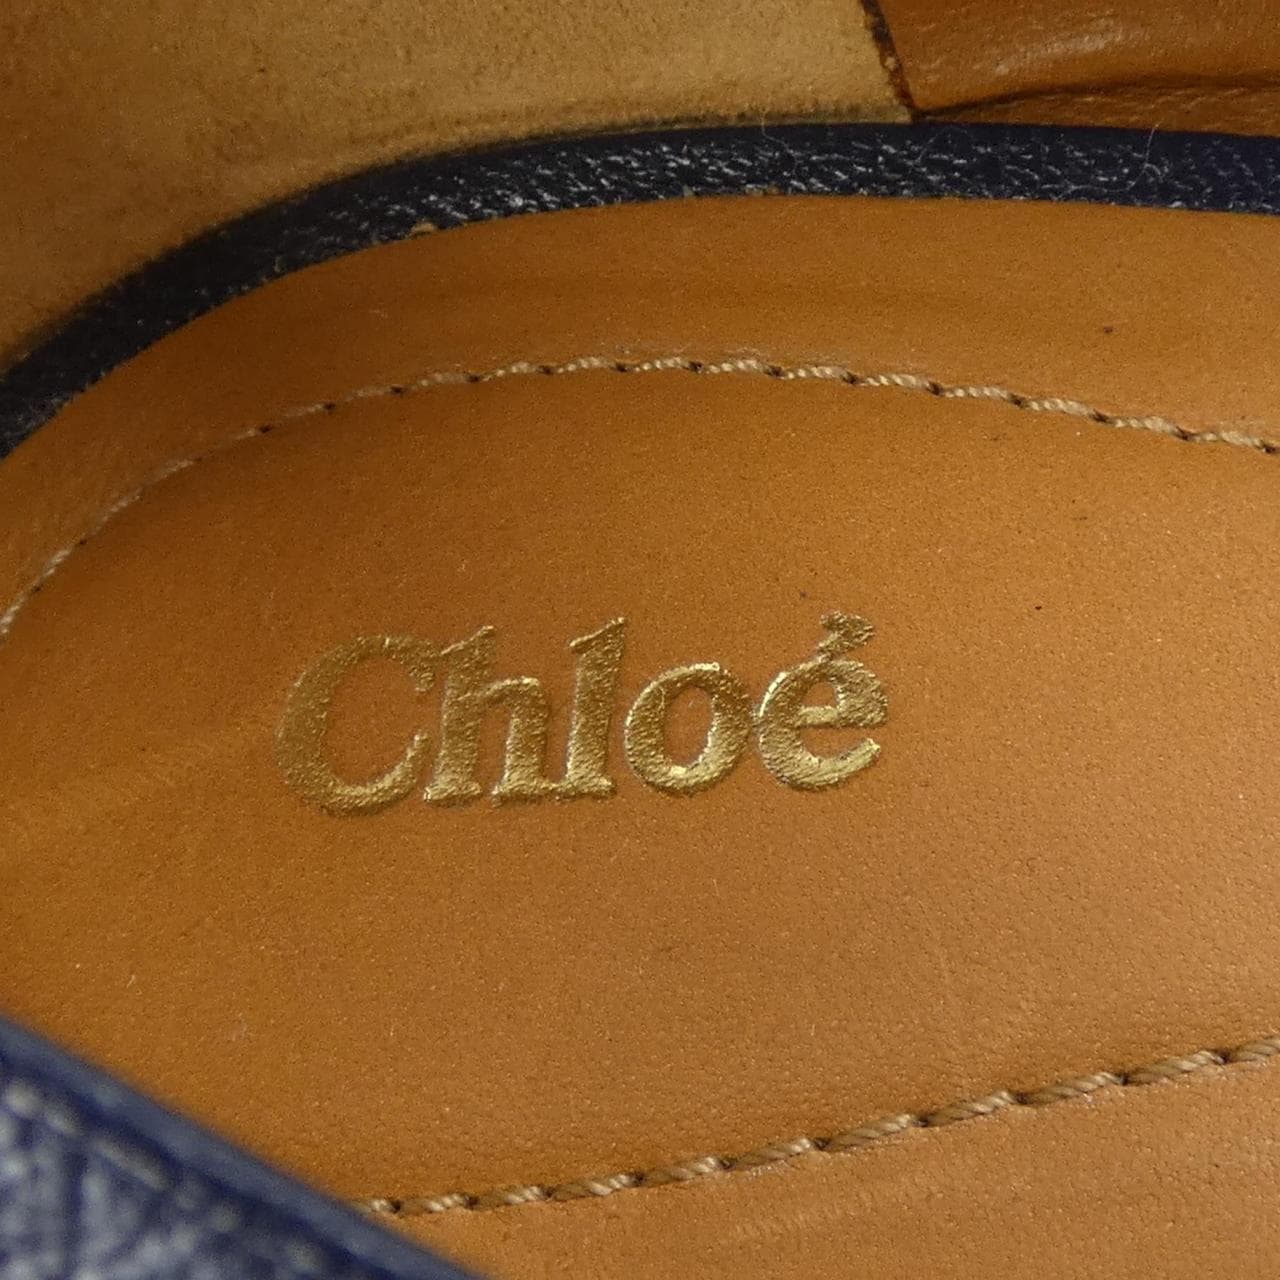 Chloe shoes